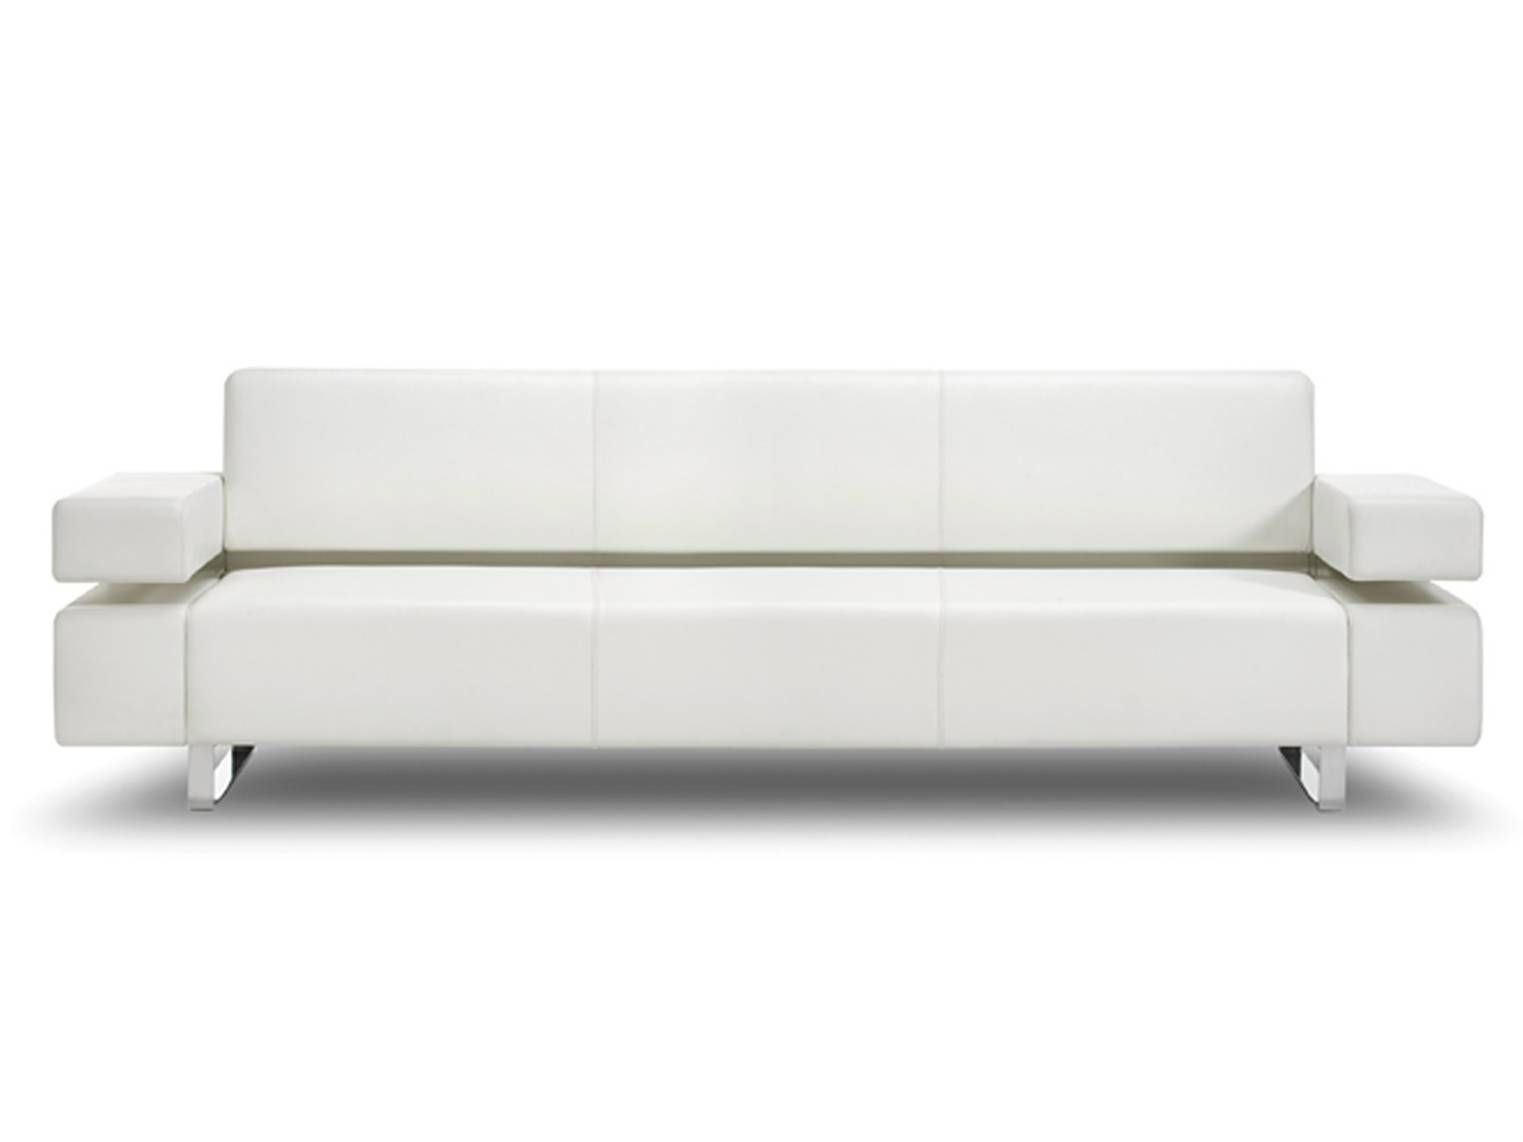 Poseidone | 3 Seater Sofatrue Design Design Leonardo Rossano With 3 Seater Leather Sofas (View 24 of 30)